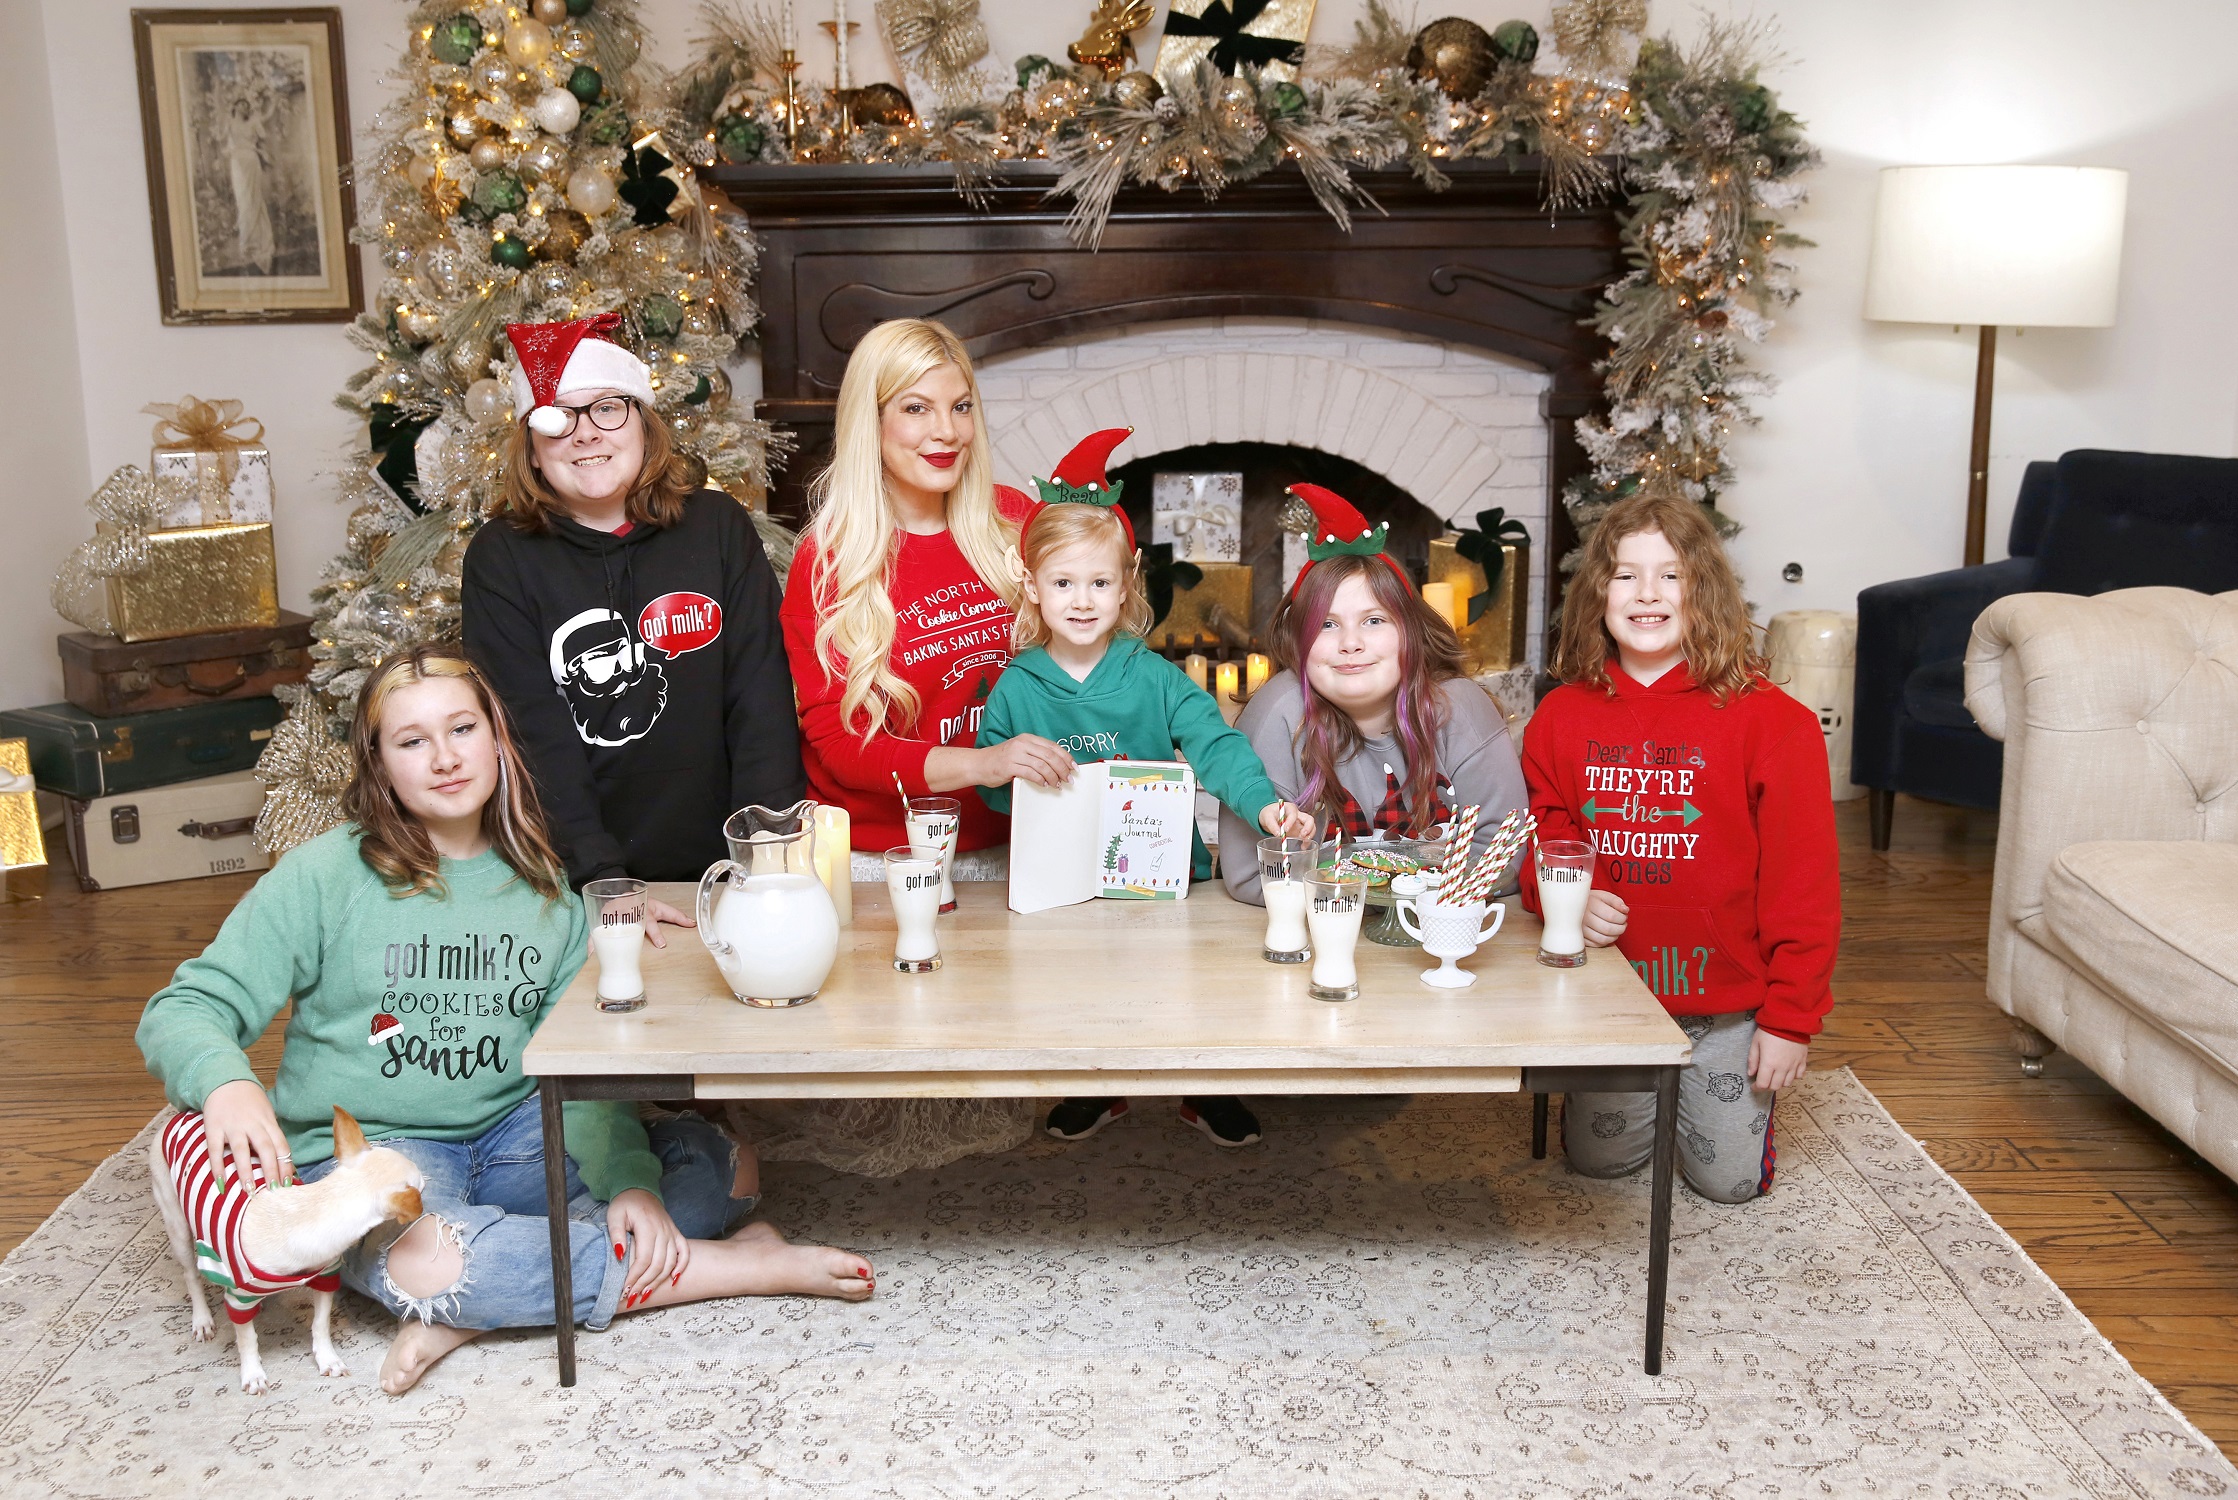 Tori Spelling with her children, Liam, Stella, Hattie, Finn and Beau McDermott in a 'Got Milk' campaign